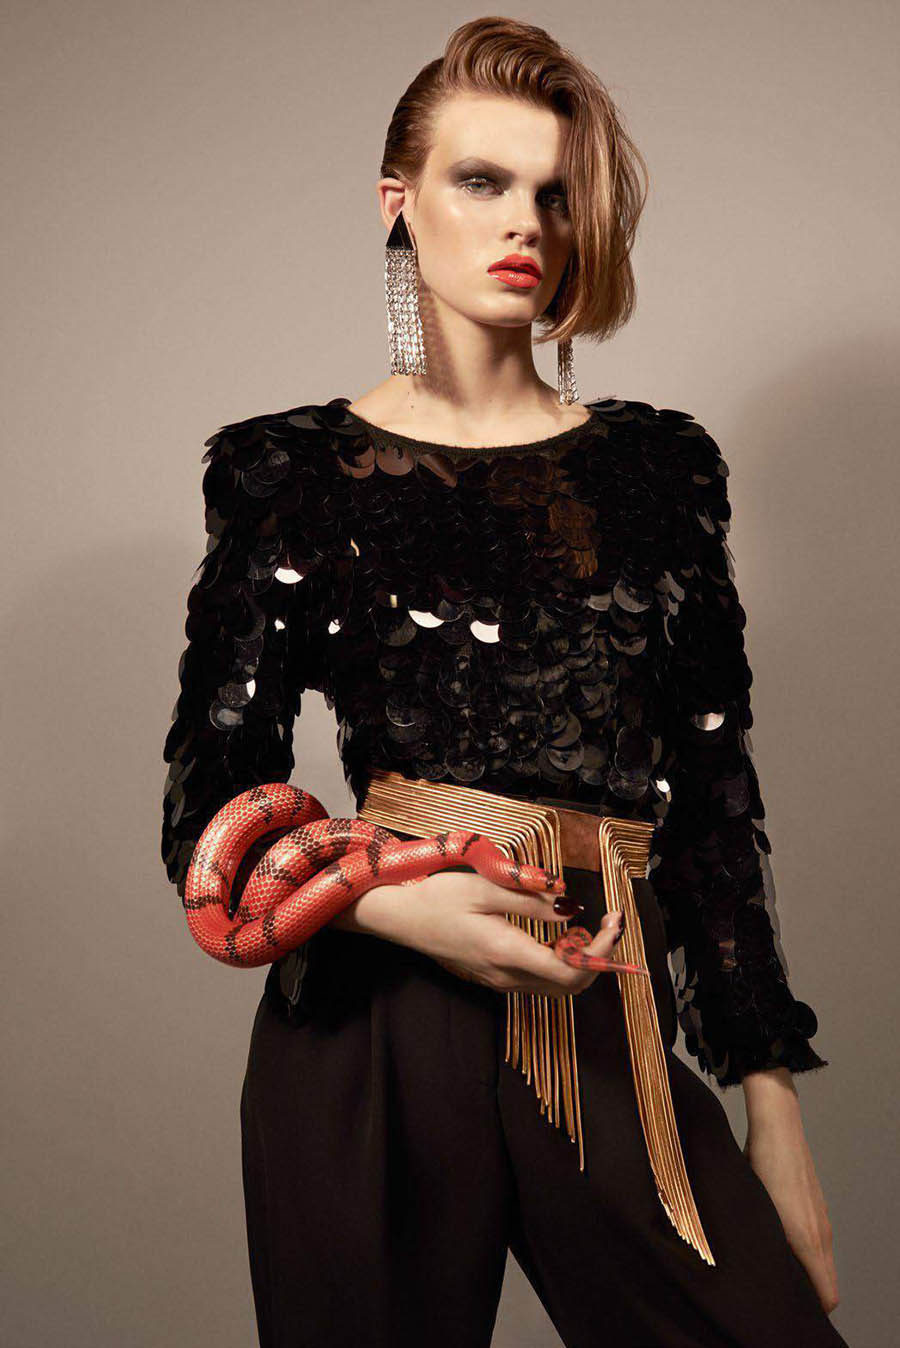 Cara Taylor by Glen Luchford for Vogue Paris October 2017